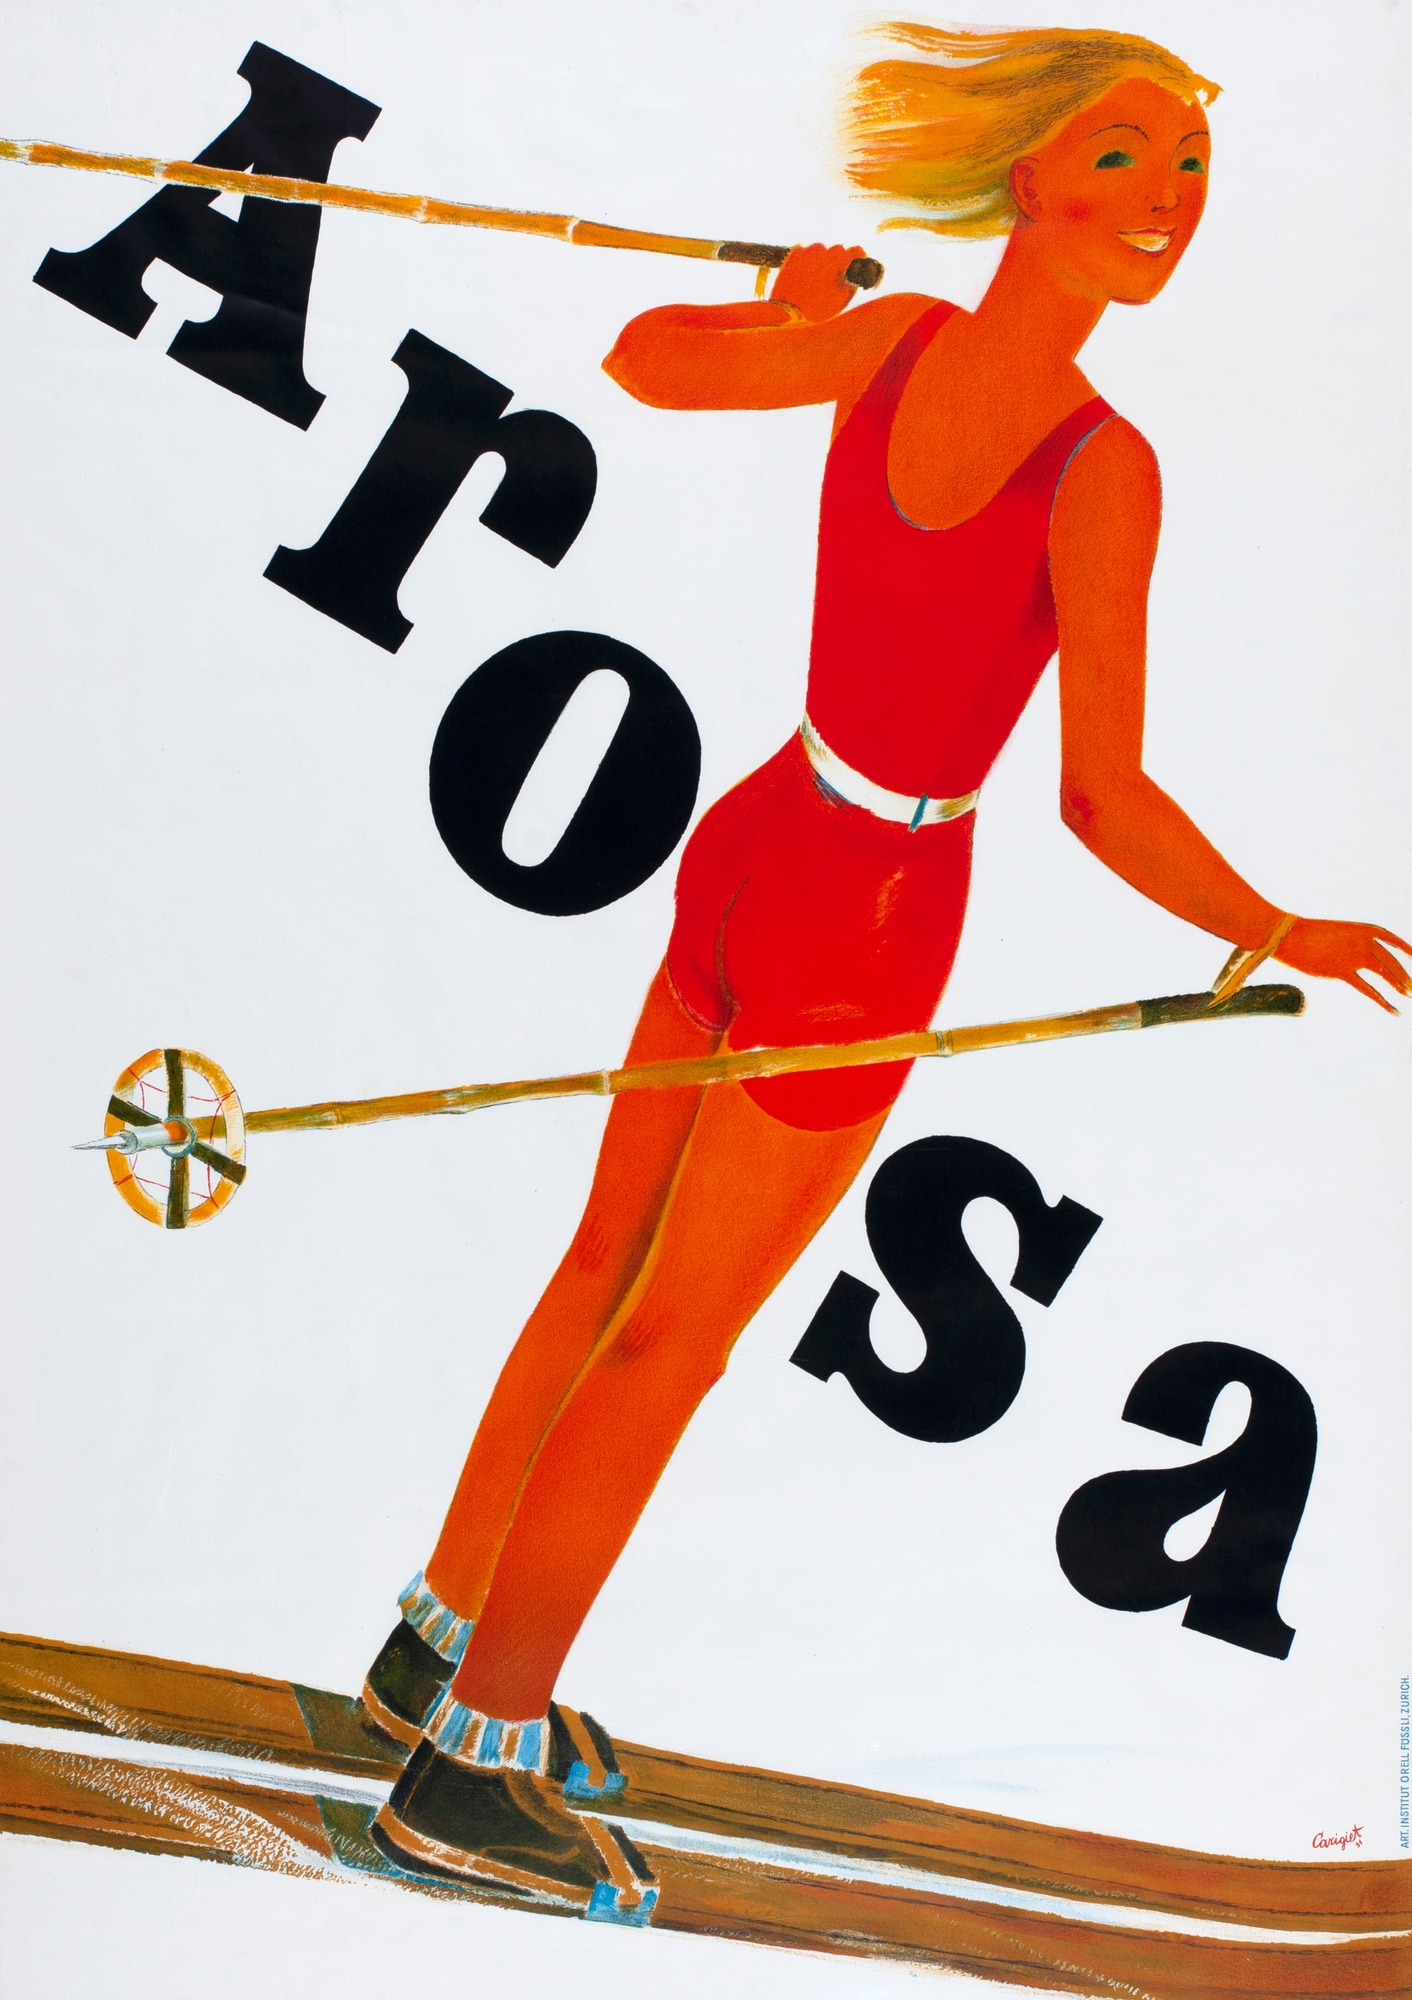 Poster. Arosa by Alois Carigiet, 1931